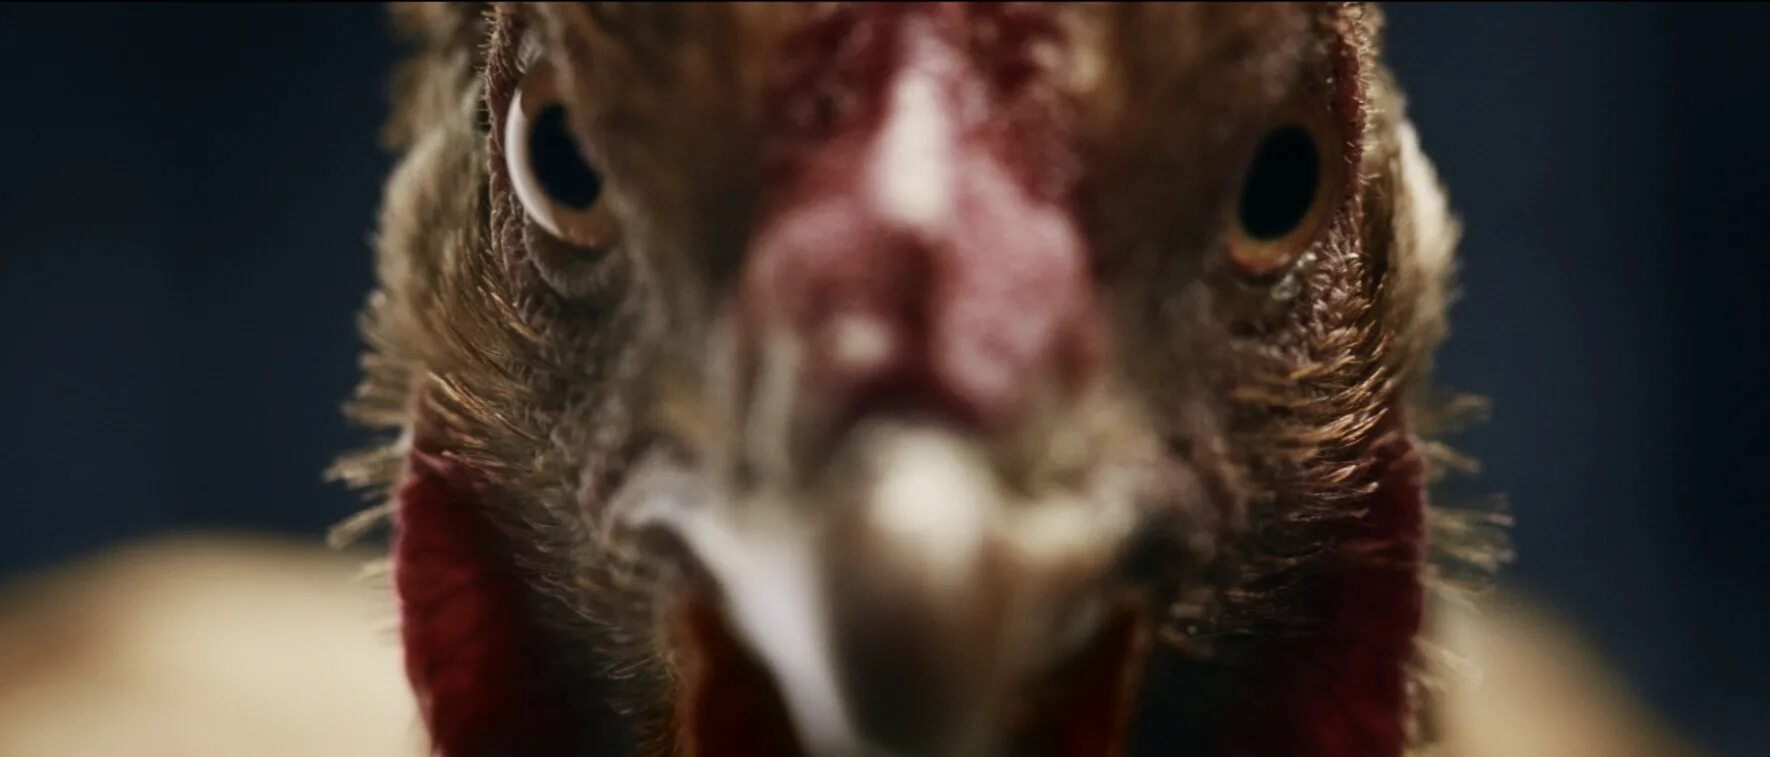 Реклама Мерседес Бенц с курицами. Курица в гневе.